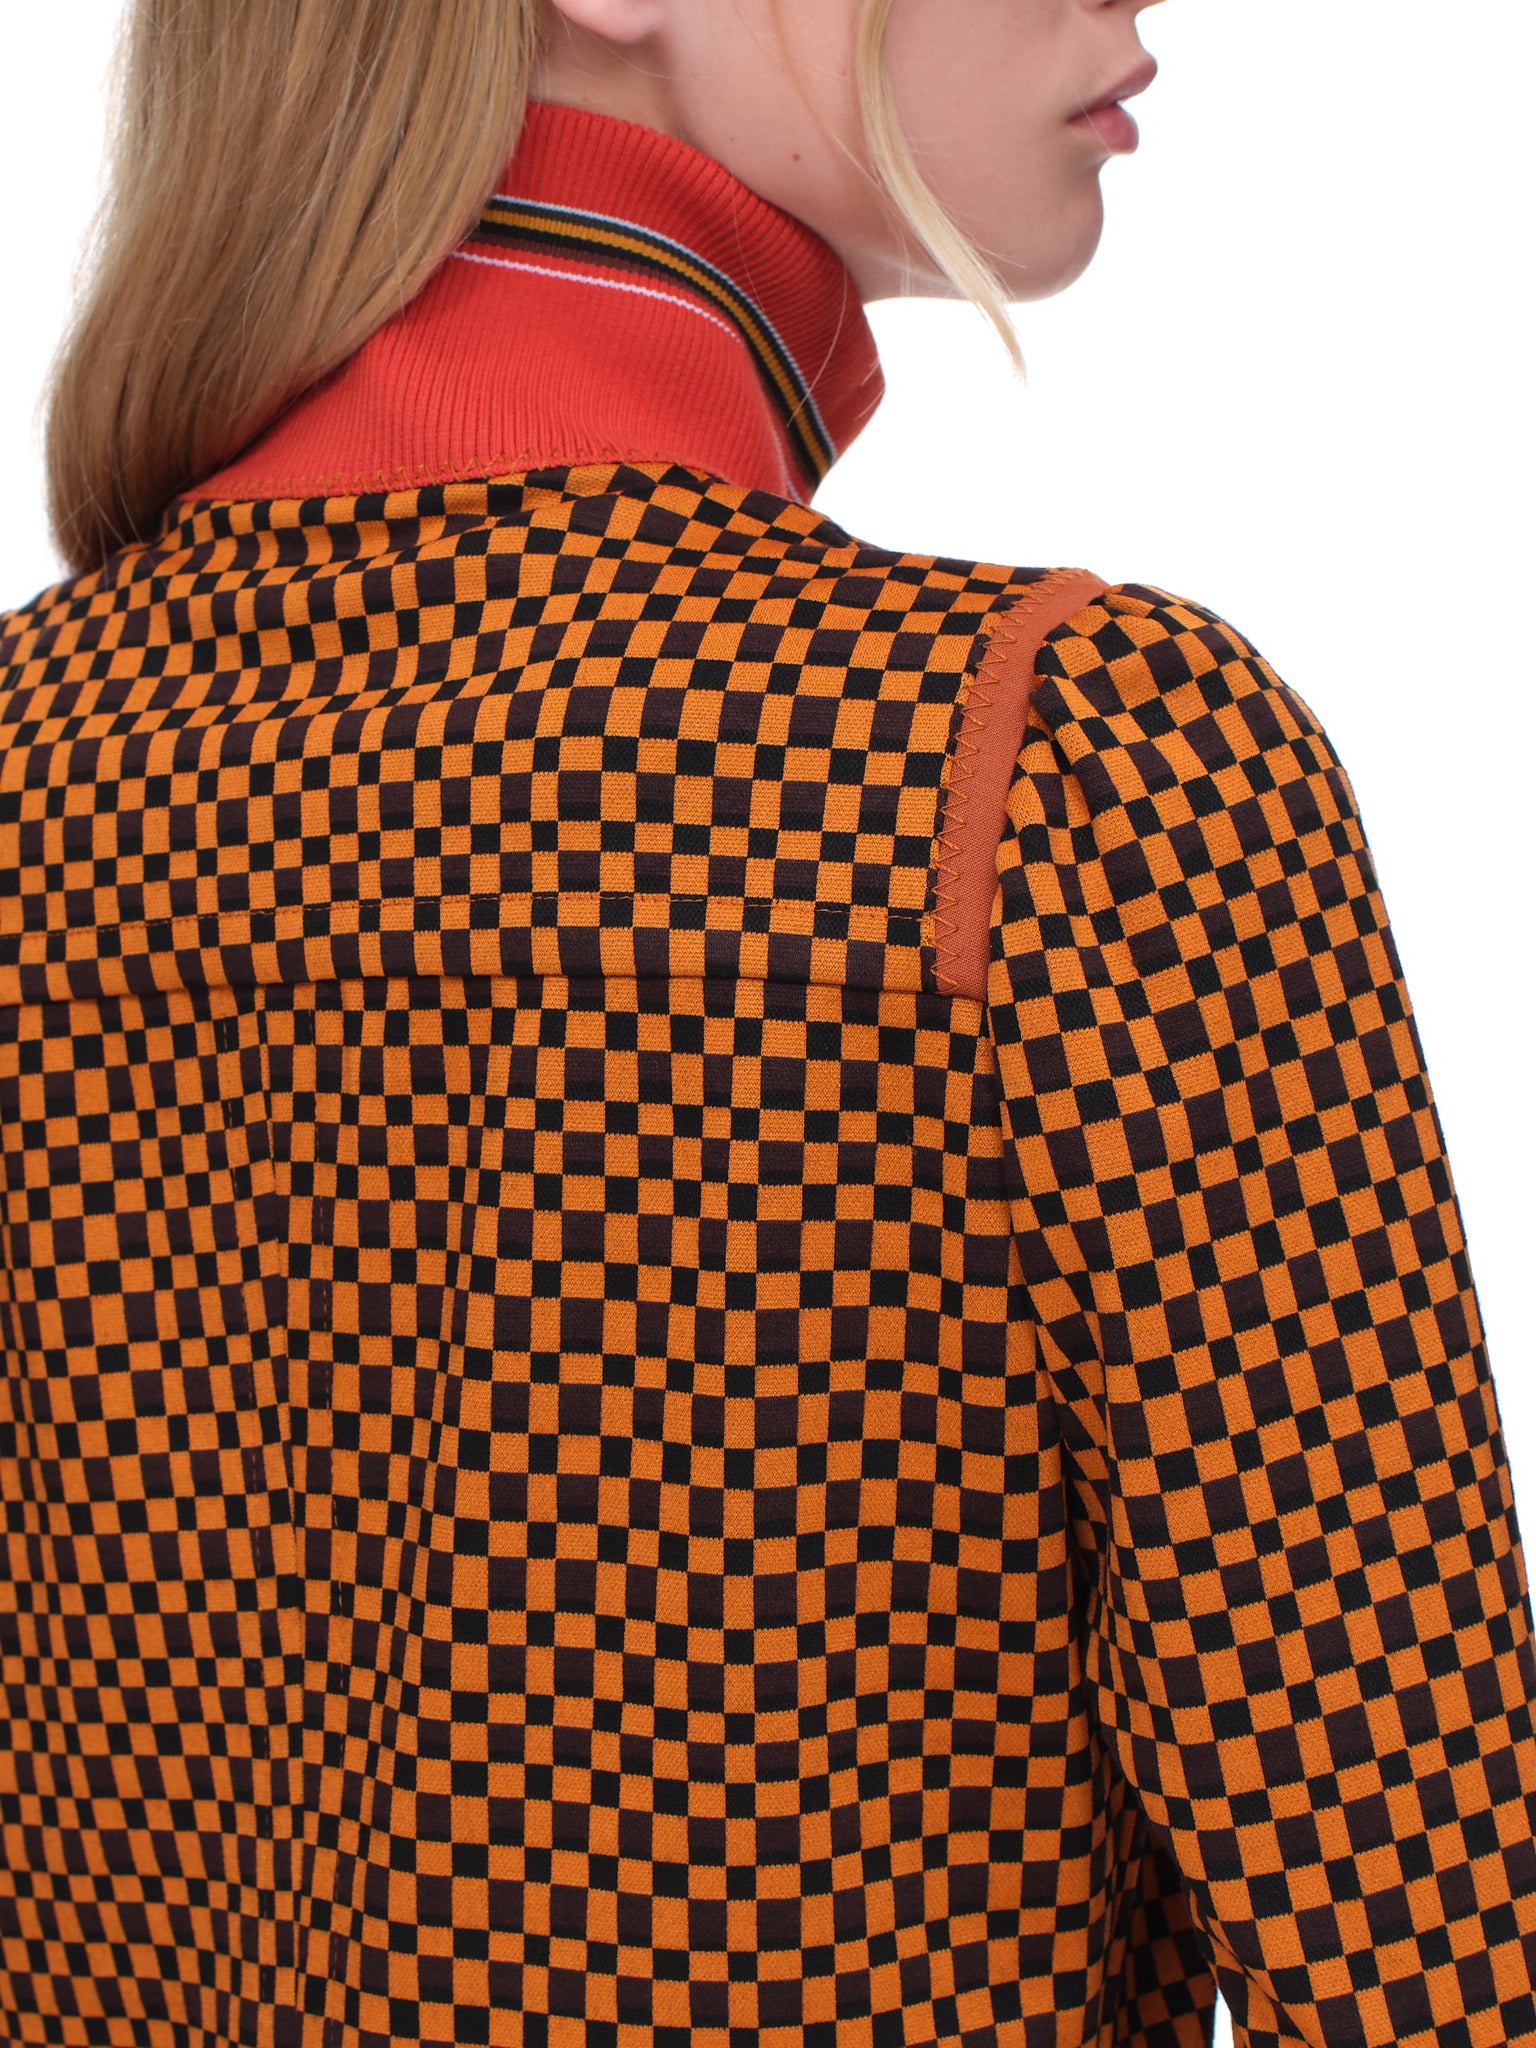 Marni Jacquard Jacket | H.Lorenzo - detail 1